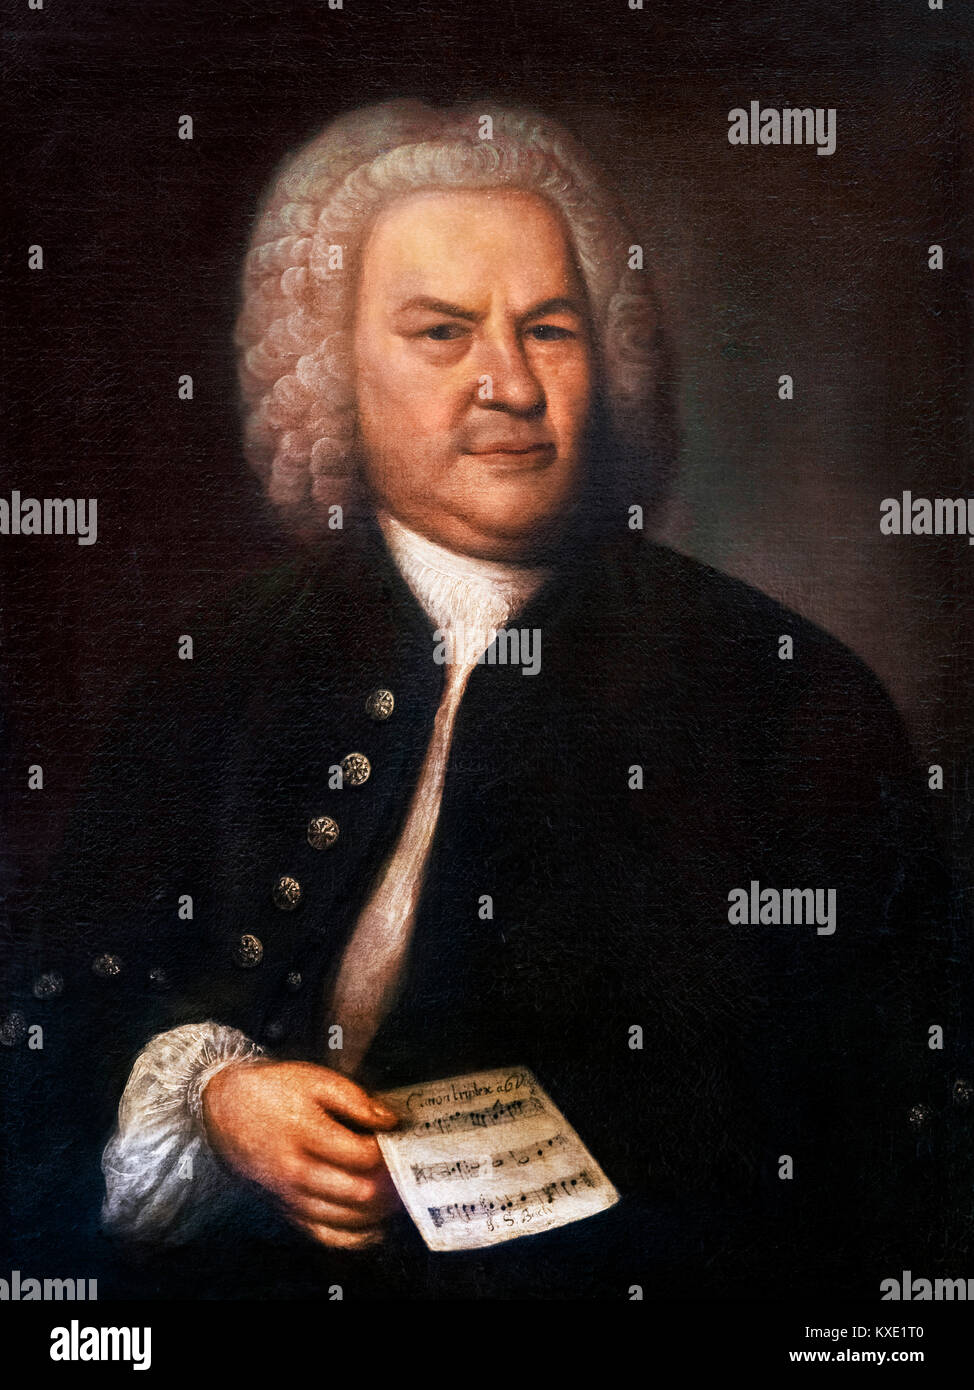 Johann Sebastian Bach, ritratto del barocco tedesco compositore, J S Bach (1685-1750) da Elias Gottlob Haußmann, 1746. Foto Stock